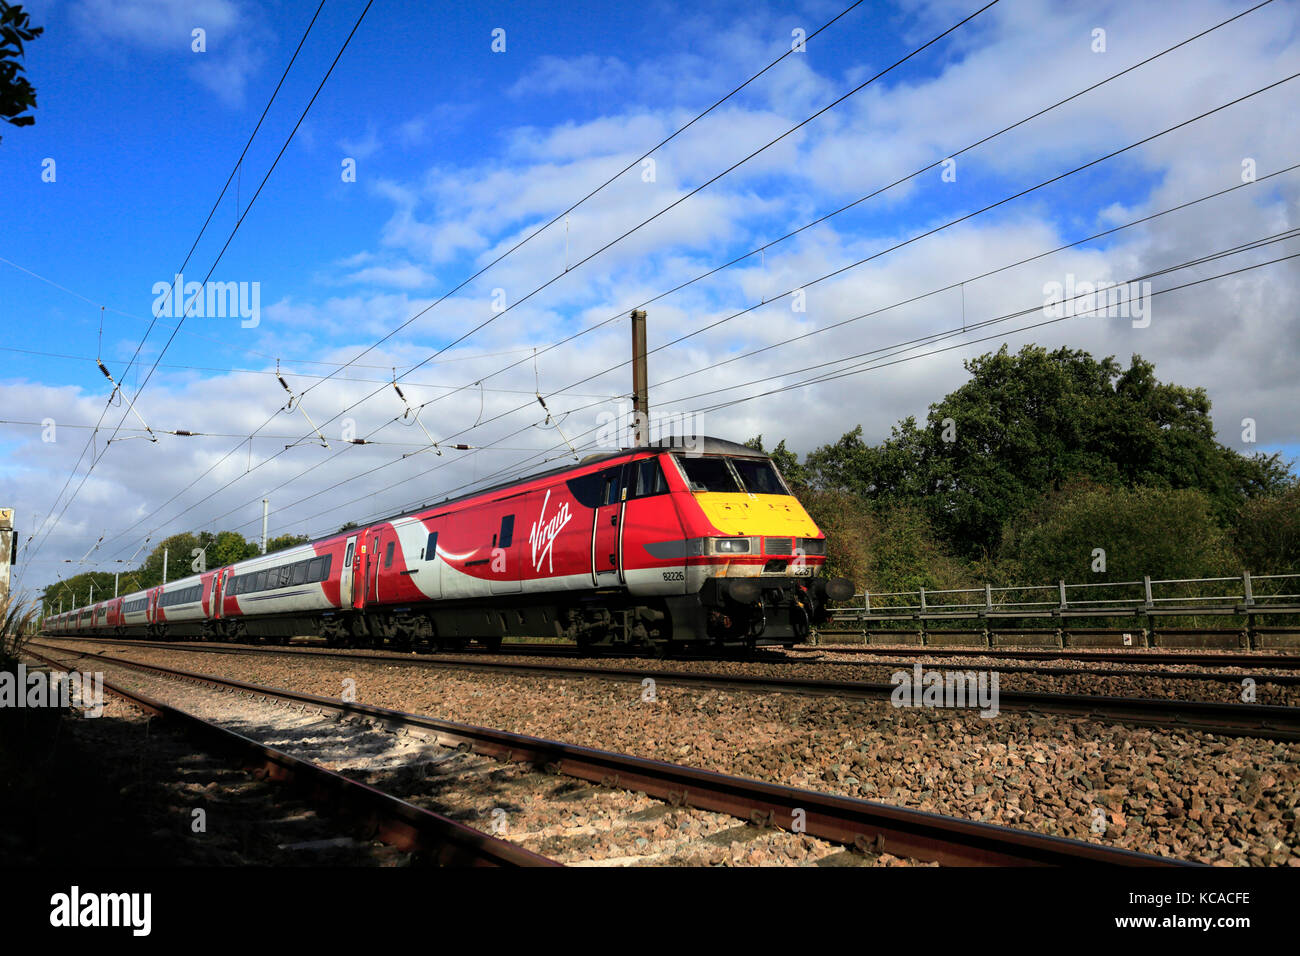 82226 East Coast Trains, High Speed Electric Train, East Coast Main Line Railway, Peterborough, Cambridgeshire, England, UK Stock Photo